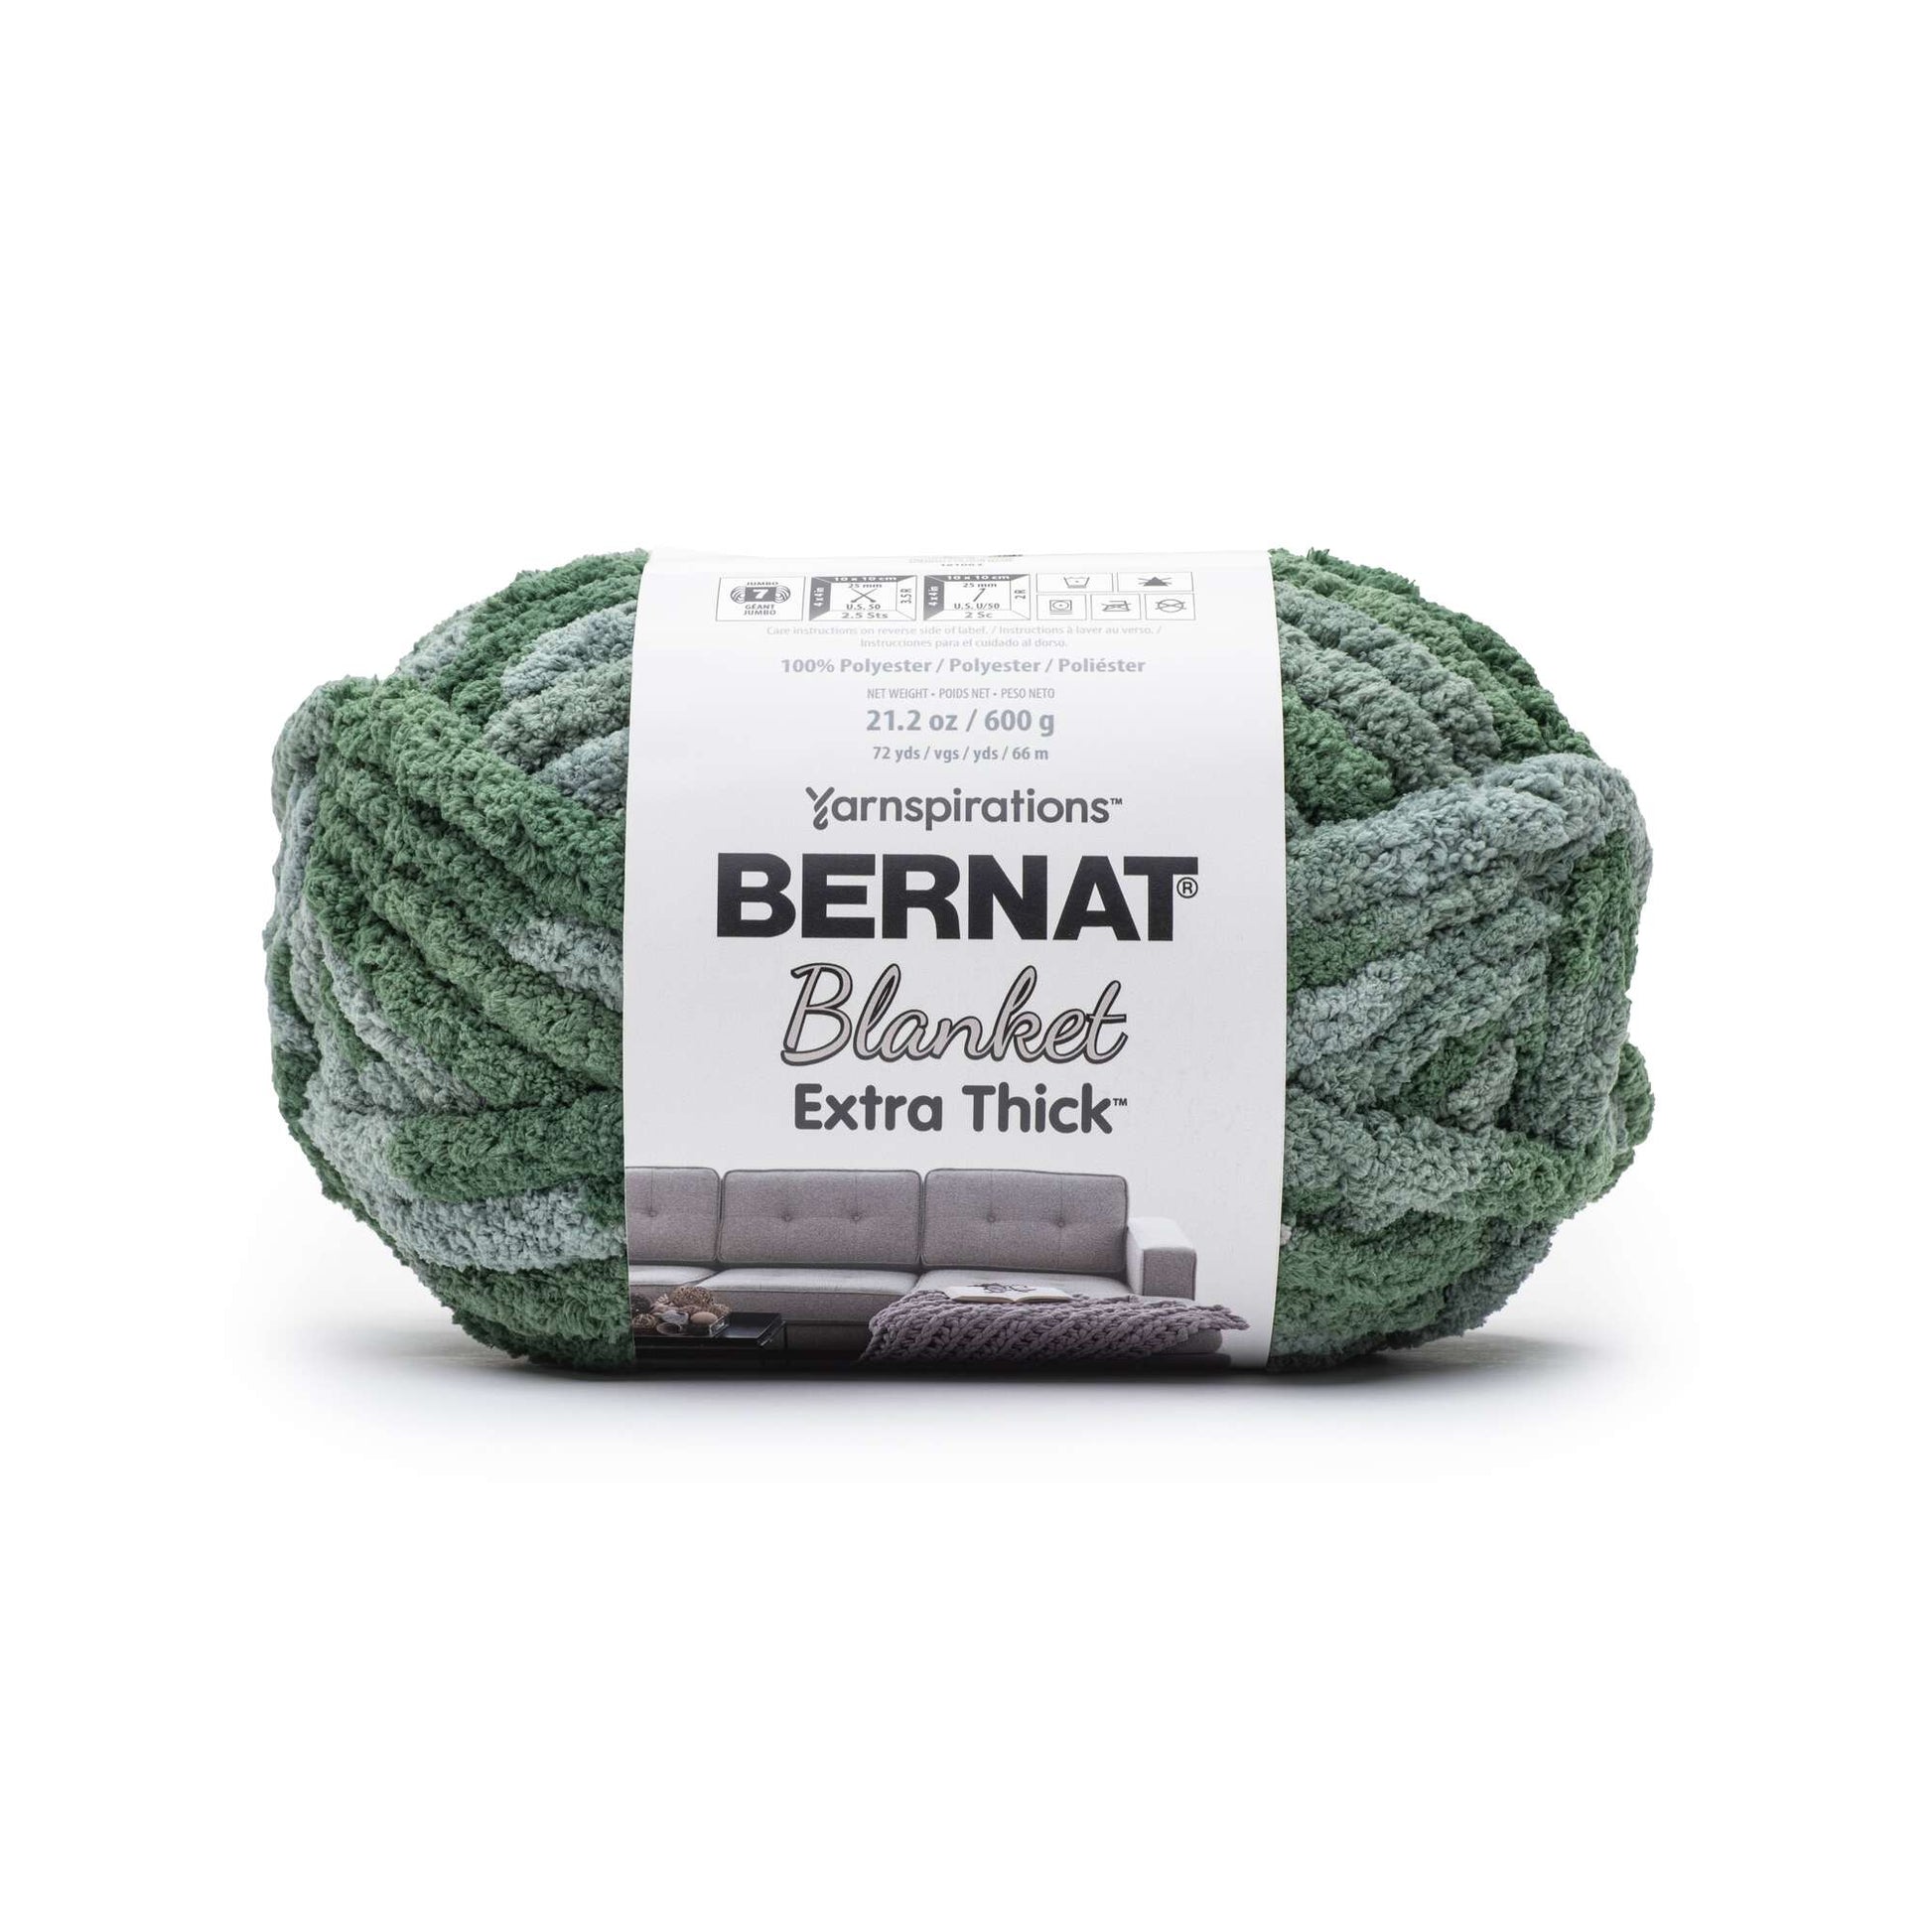 Bernat Blanket Extra Thick Yarn (600g/21.2oz) - Discontinued Shades Underbrush